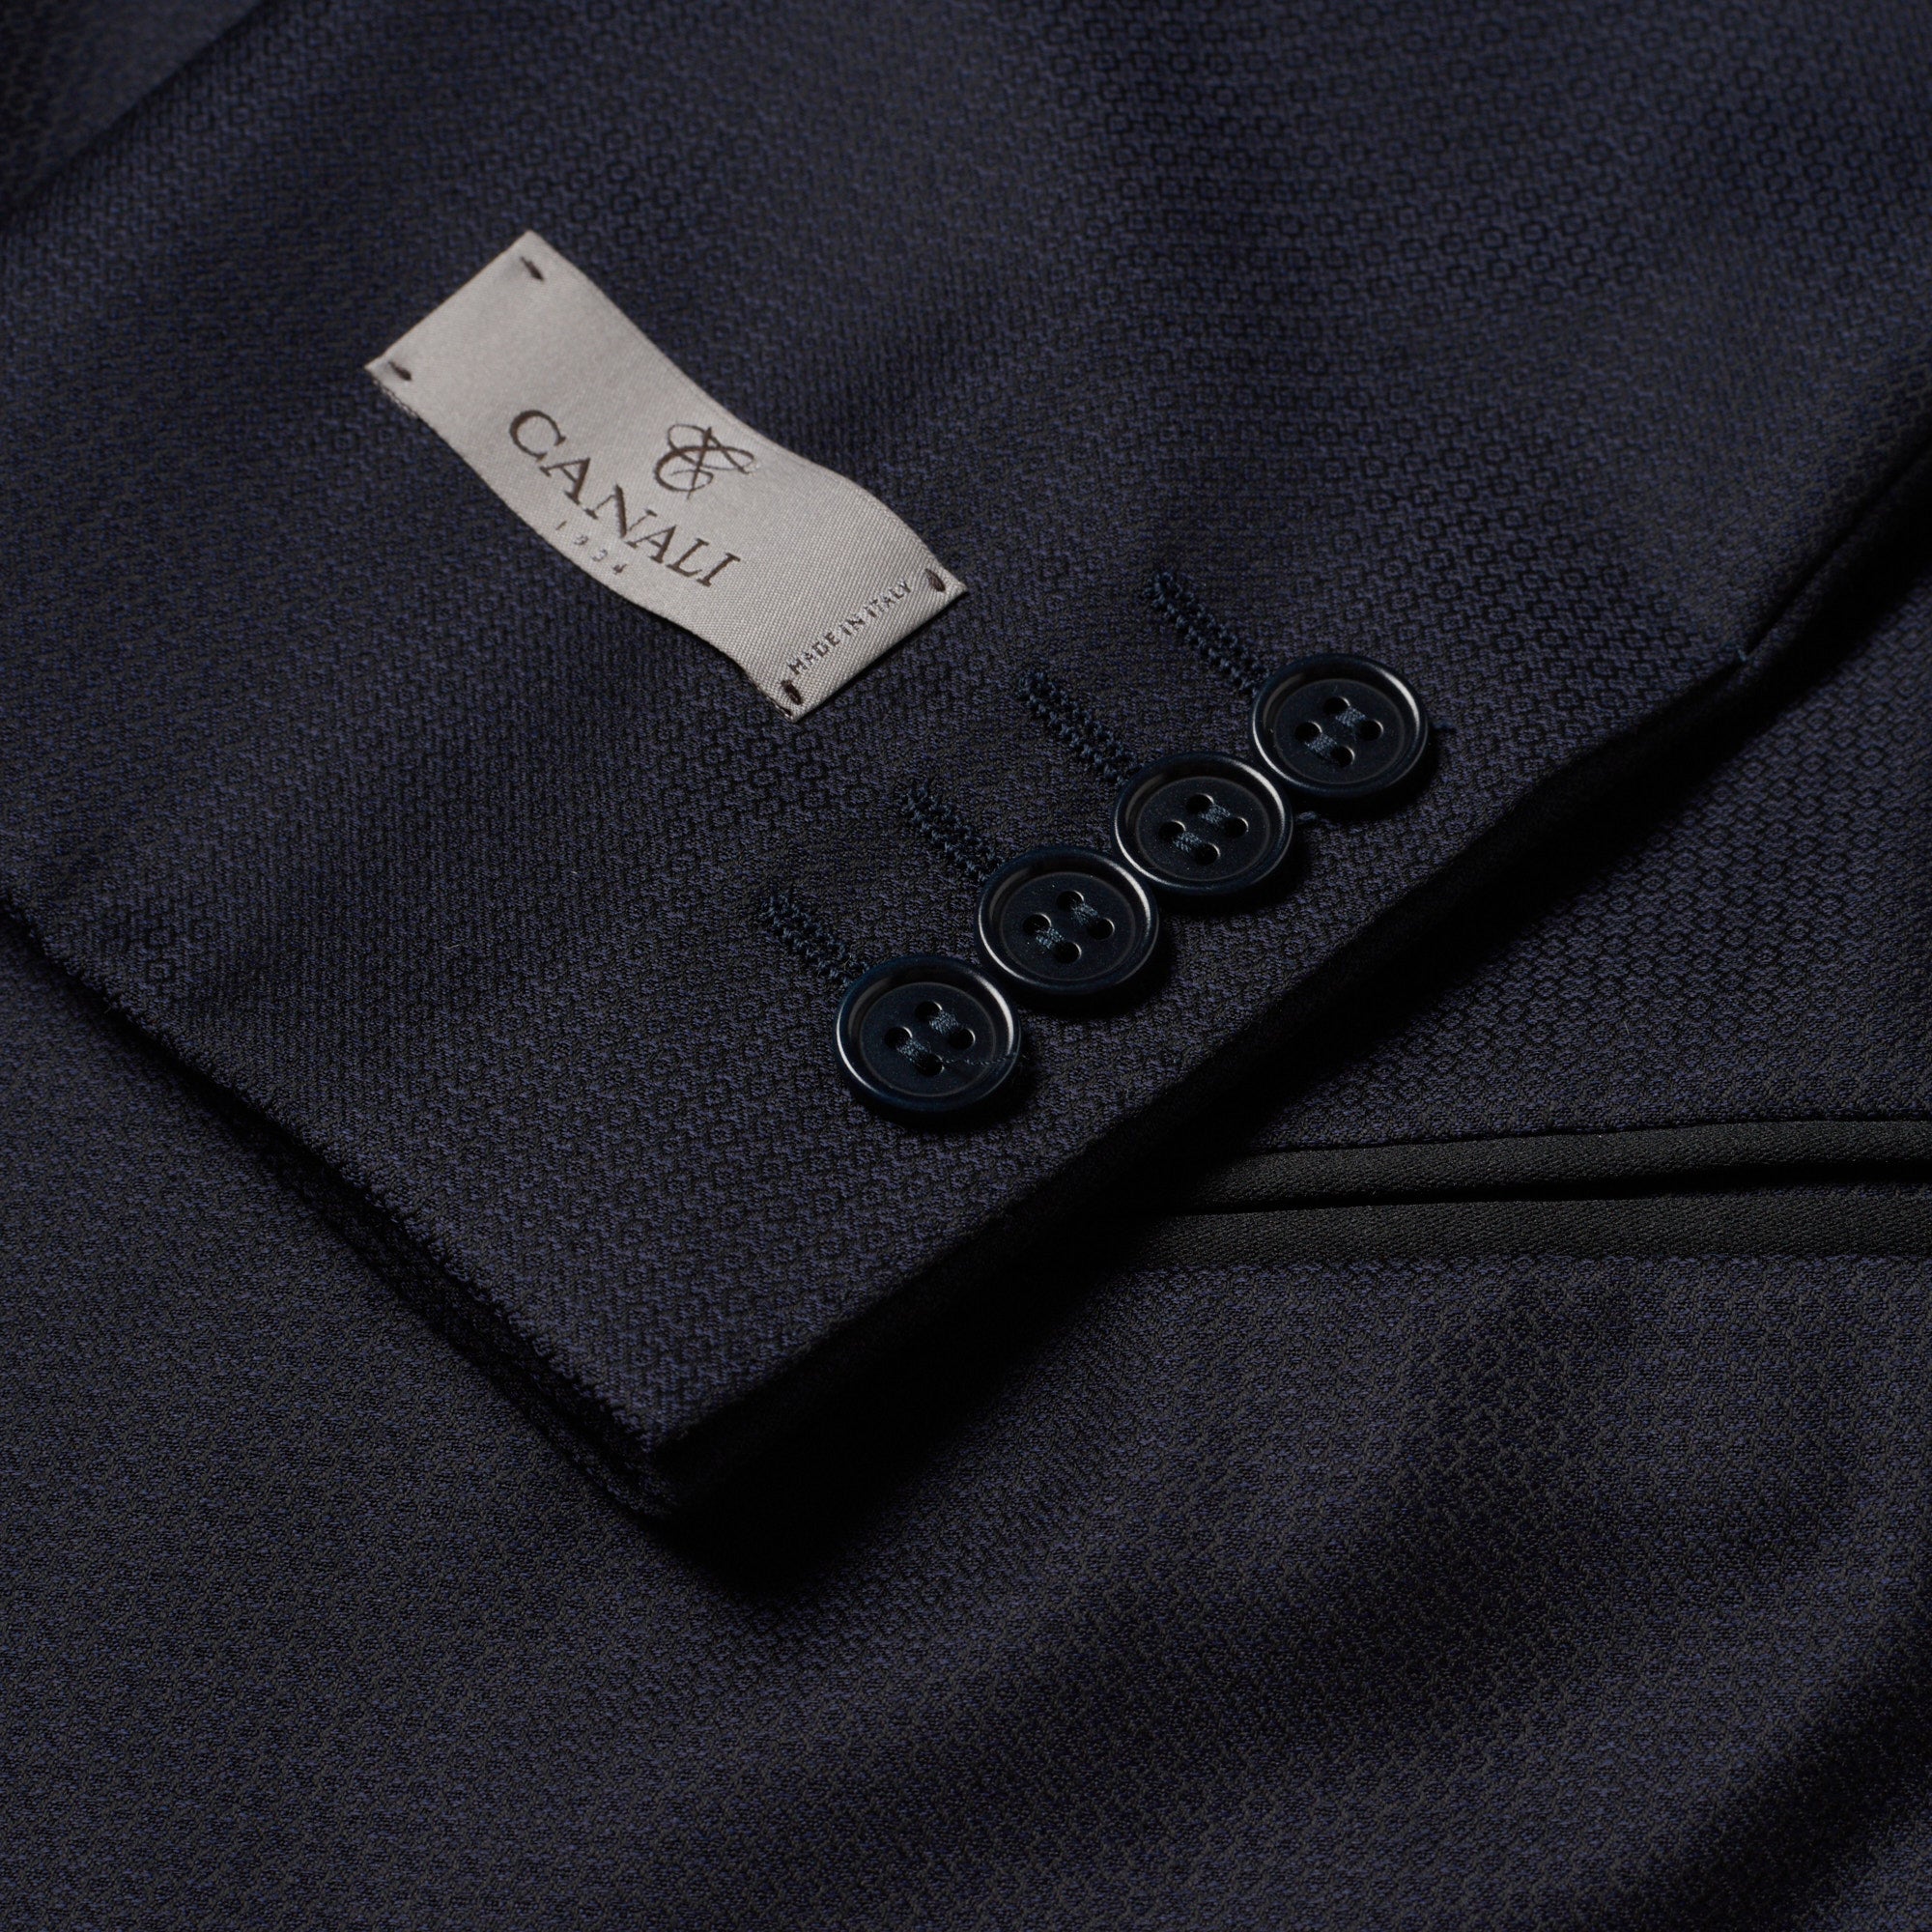 CANALI 1934 Blue Jacquard Wool 3 Piece Shawl Collar Formal Suit EU 50 US 40 Slim Fit CANALI